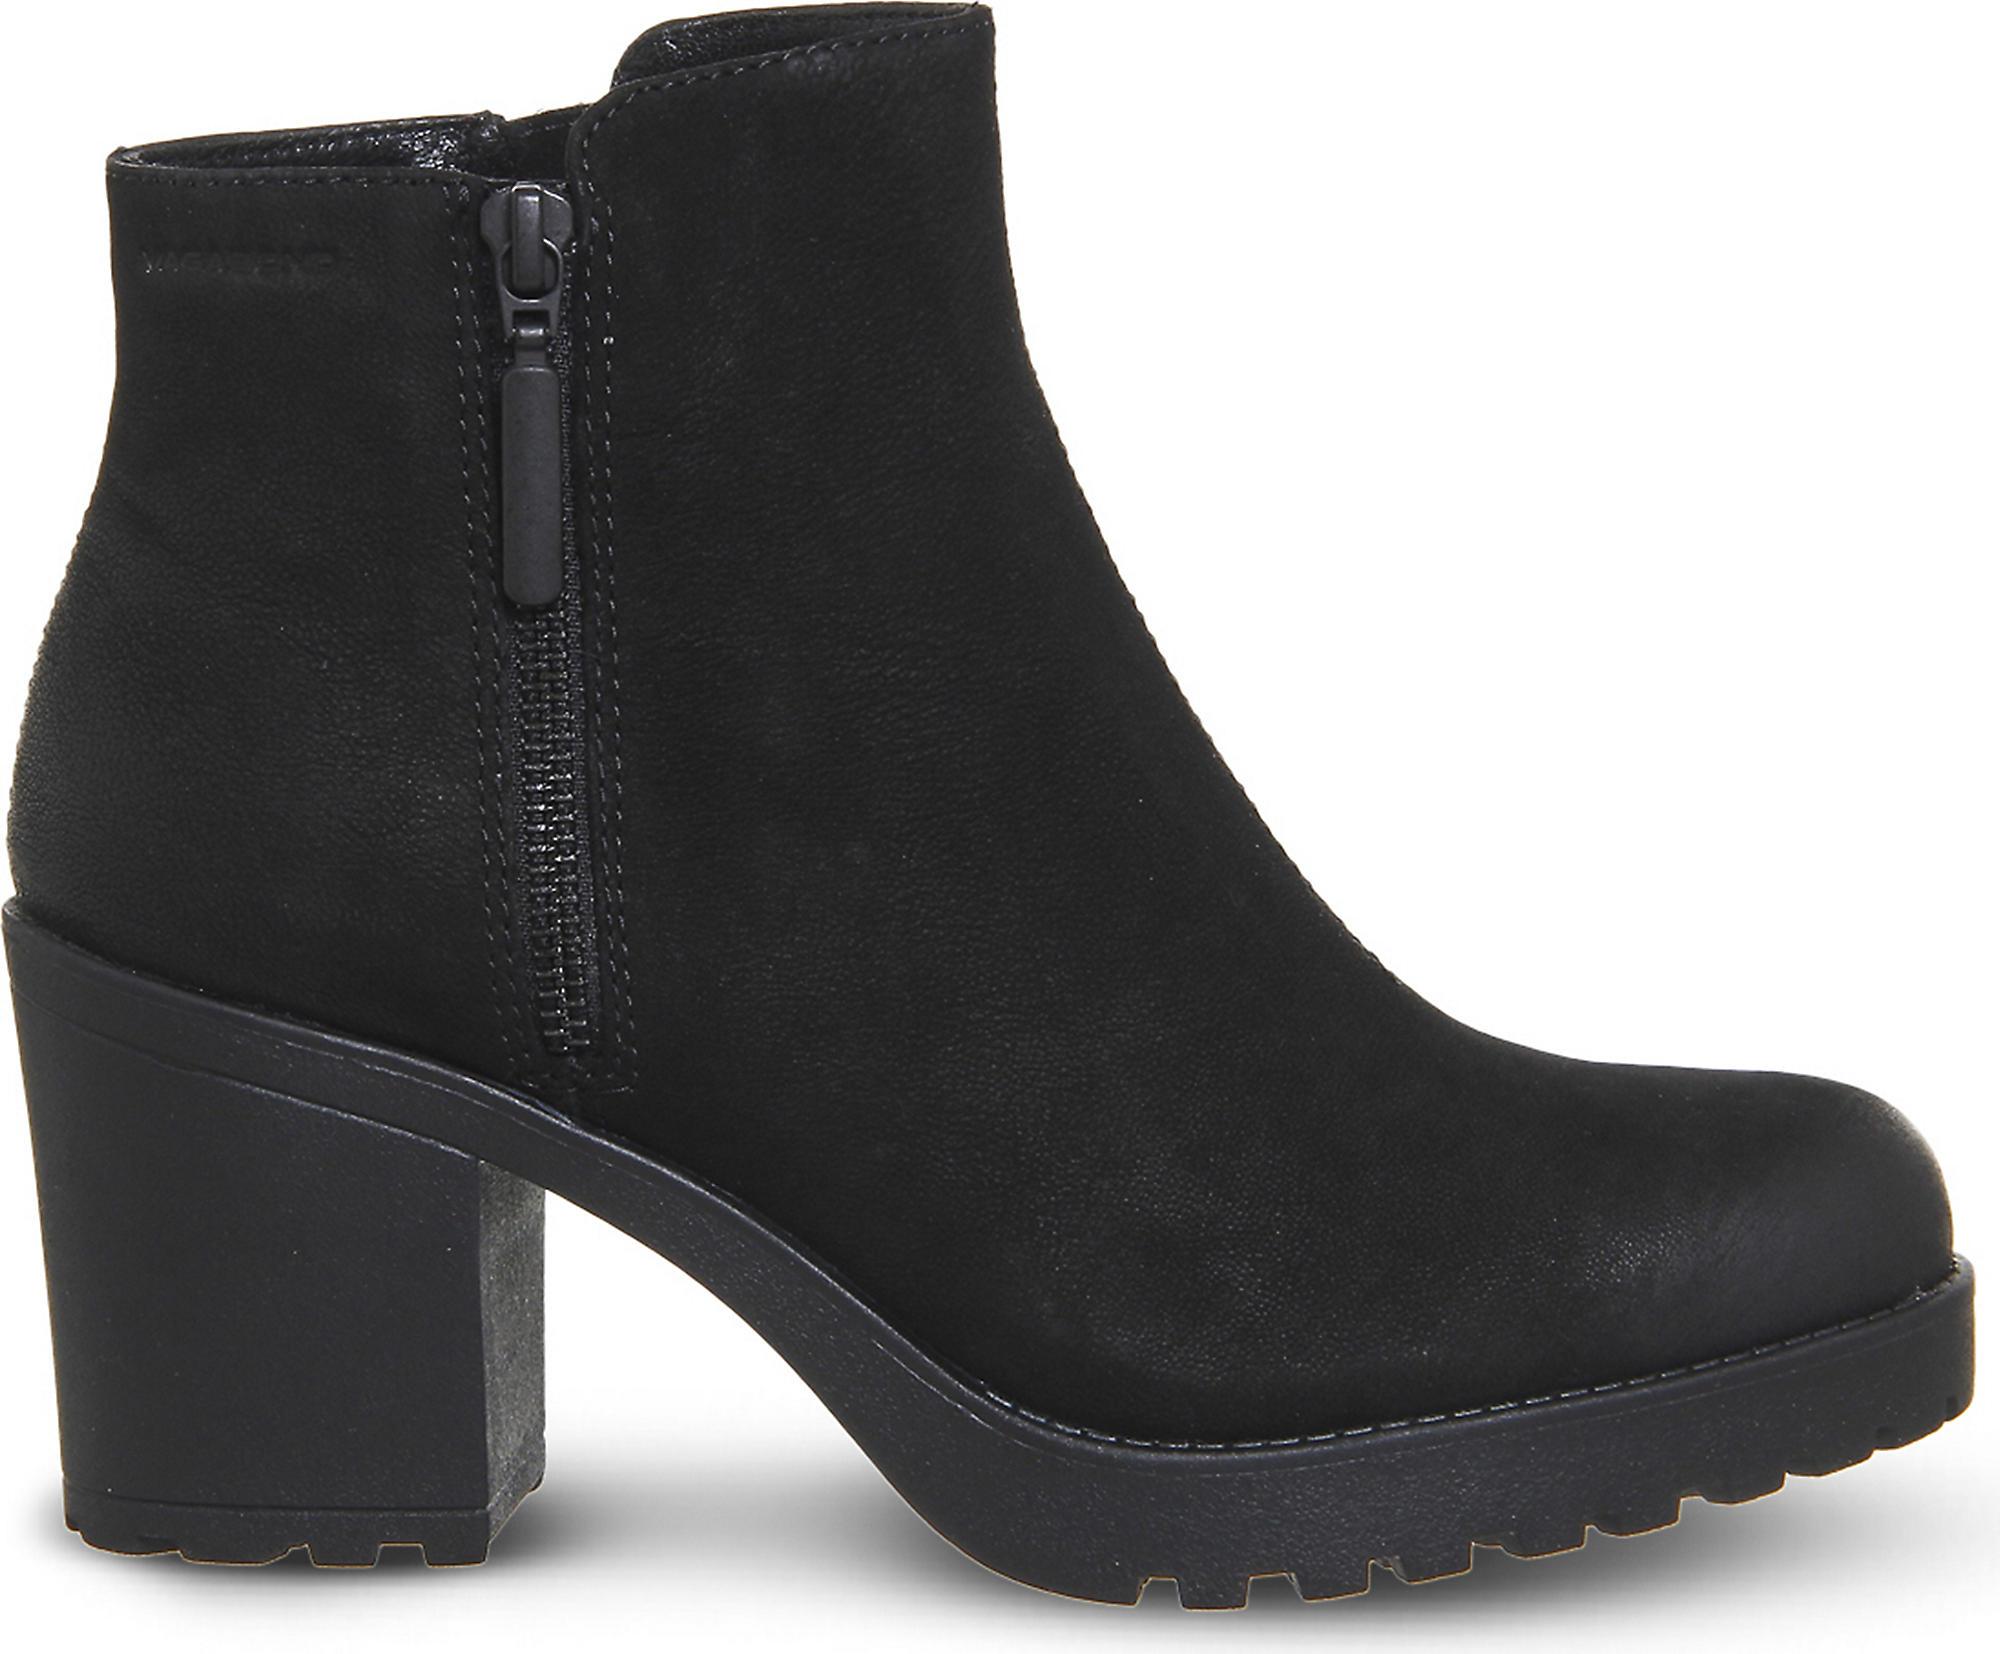 Vagabond Grace Leather Ankle Boots in Black Nubuck (Black) - Lyst